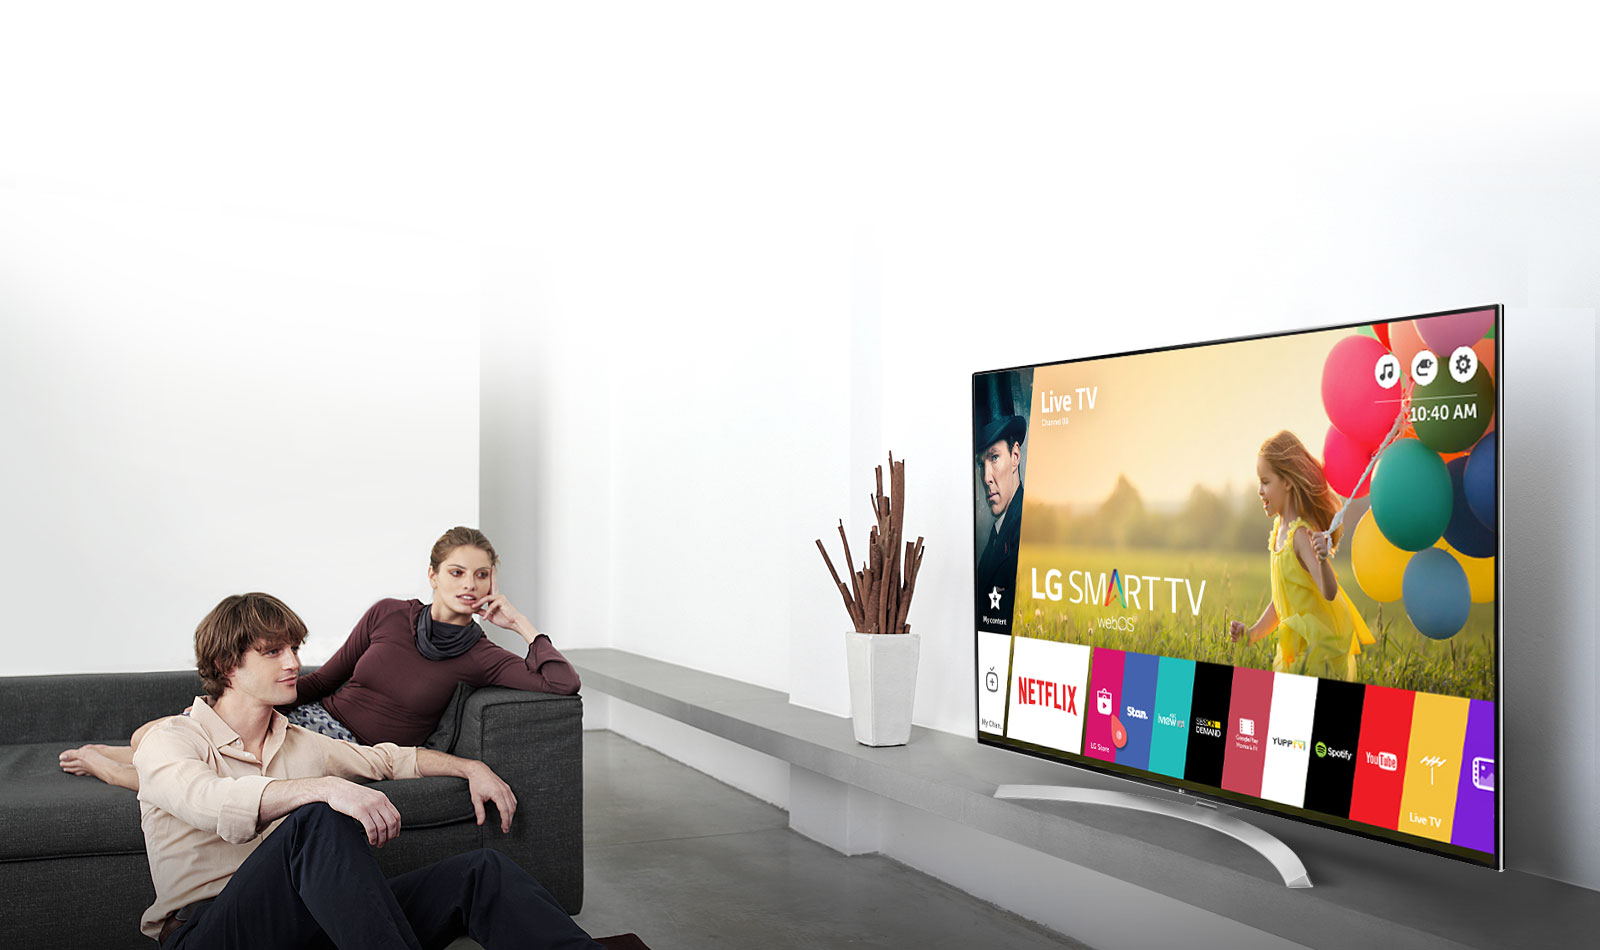 Включи хороший телевизор. Телевизор LG Smart TV. Телевизор LG Smart TV 2017. Телевизор LG Smart TV banner. Реклама на телевизорах LG Smart TV.